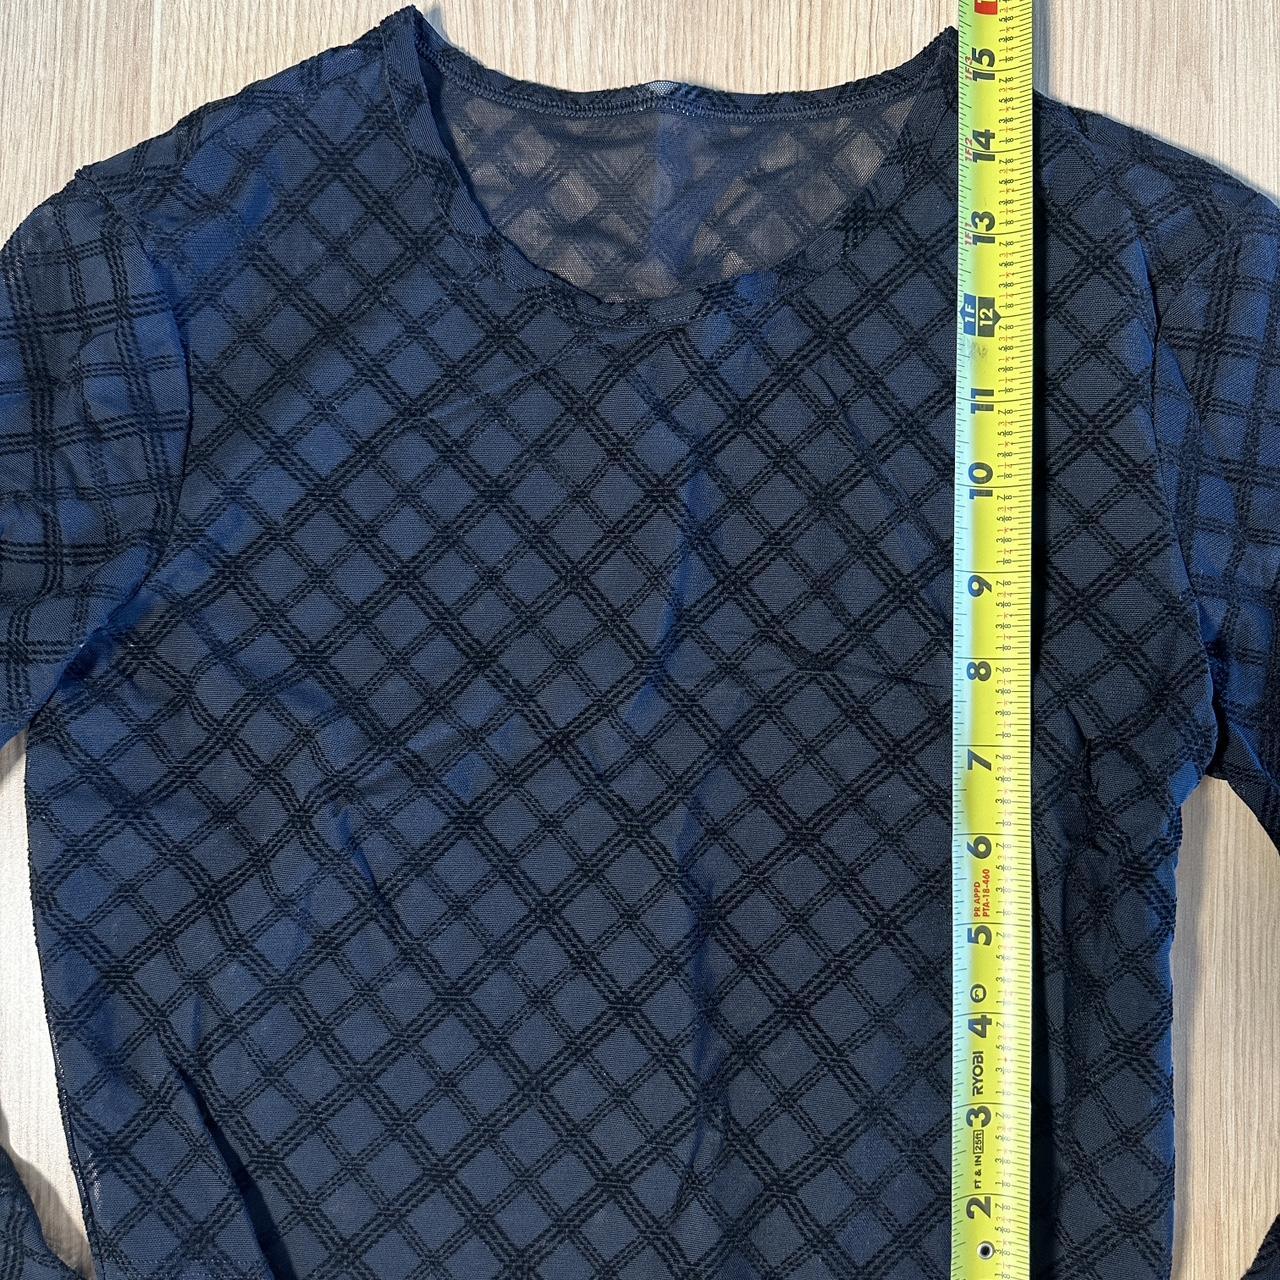 Alo size medium sweatshirt with slits in sleeves - Depop